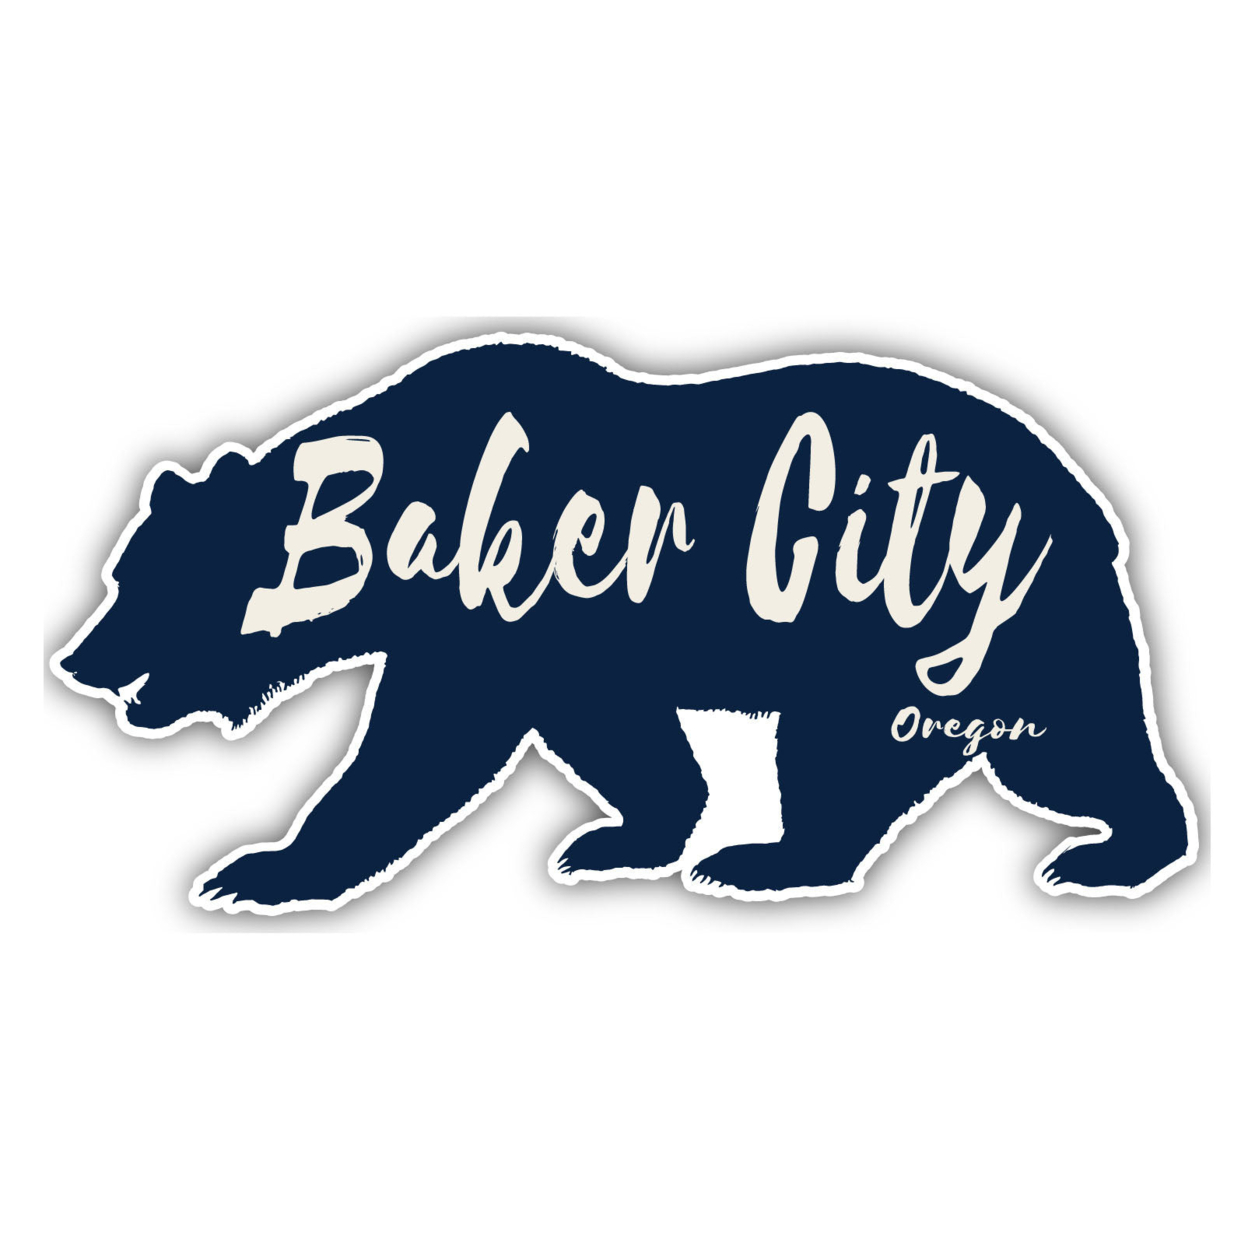 Baker City Oregon Souvenir Decorative Stickers (Choose Theme And Size) - 4-Pack, 8-Inch, Tent